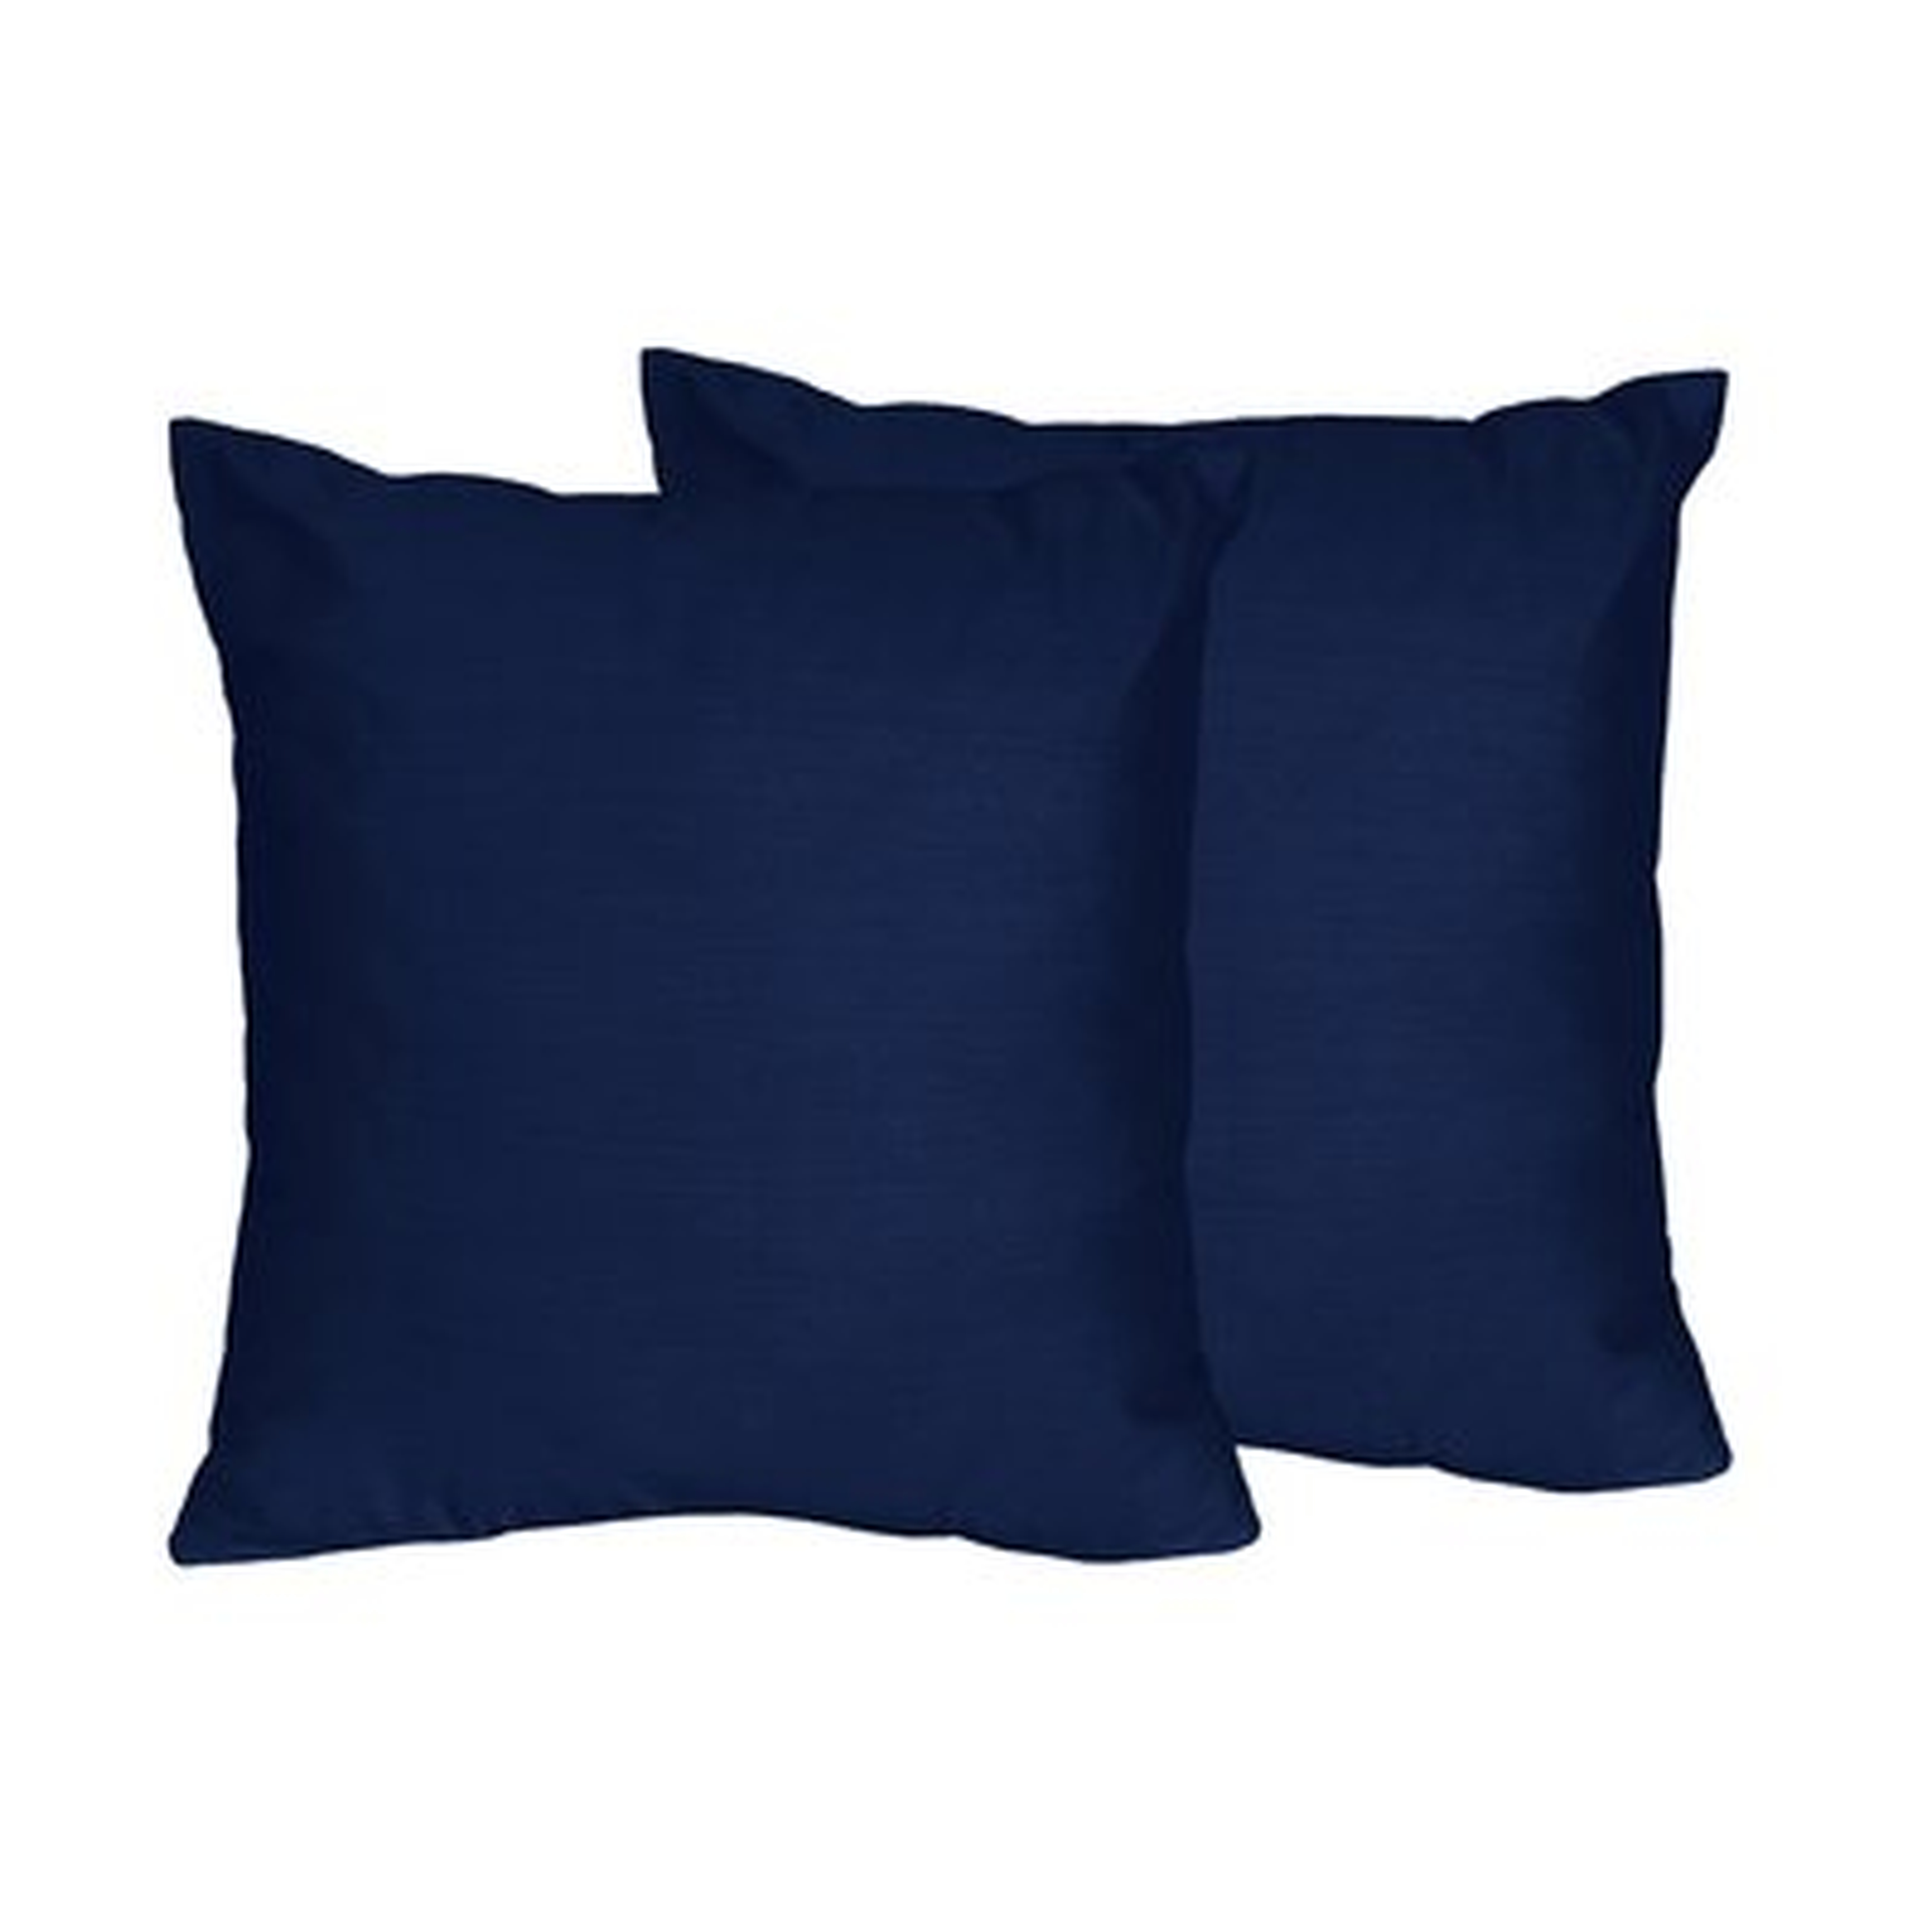 Solid Navy Blue Throw Pillows - Wayfair